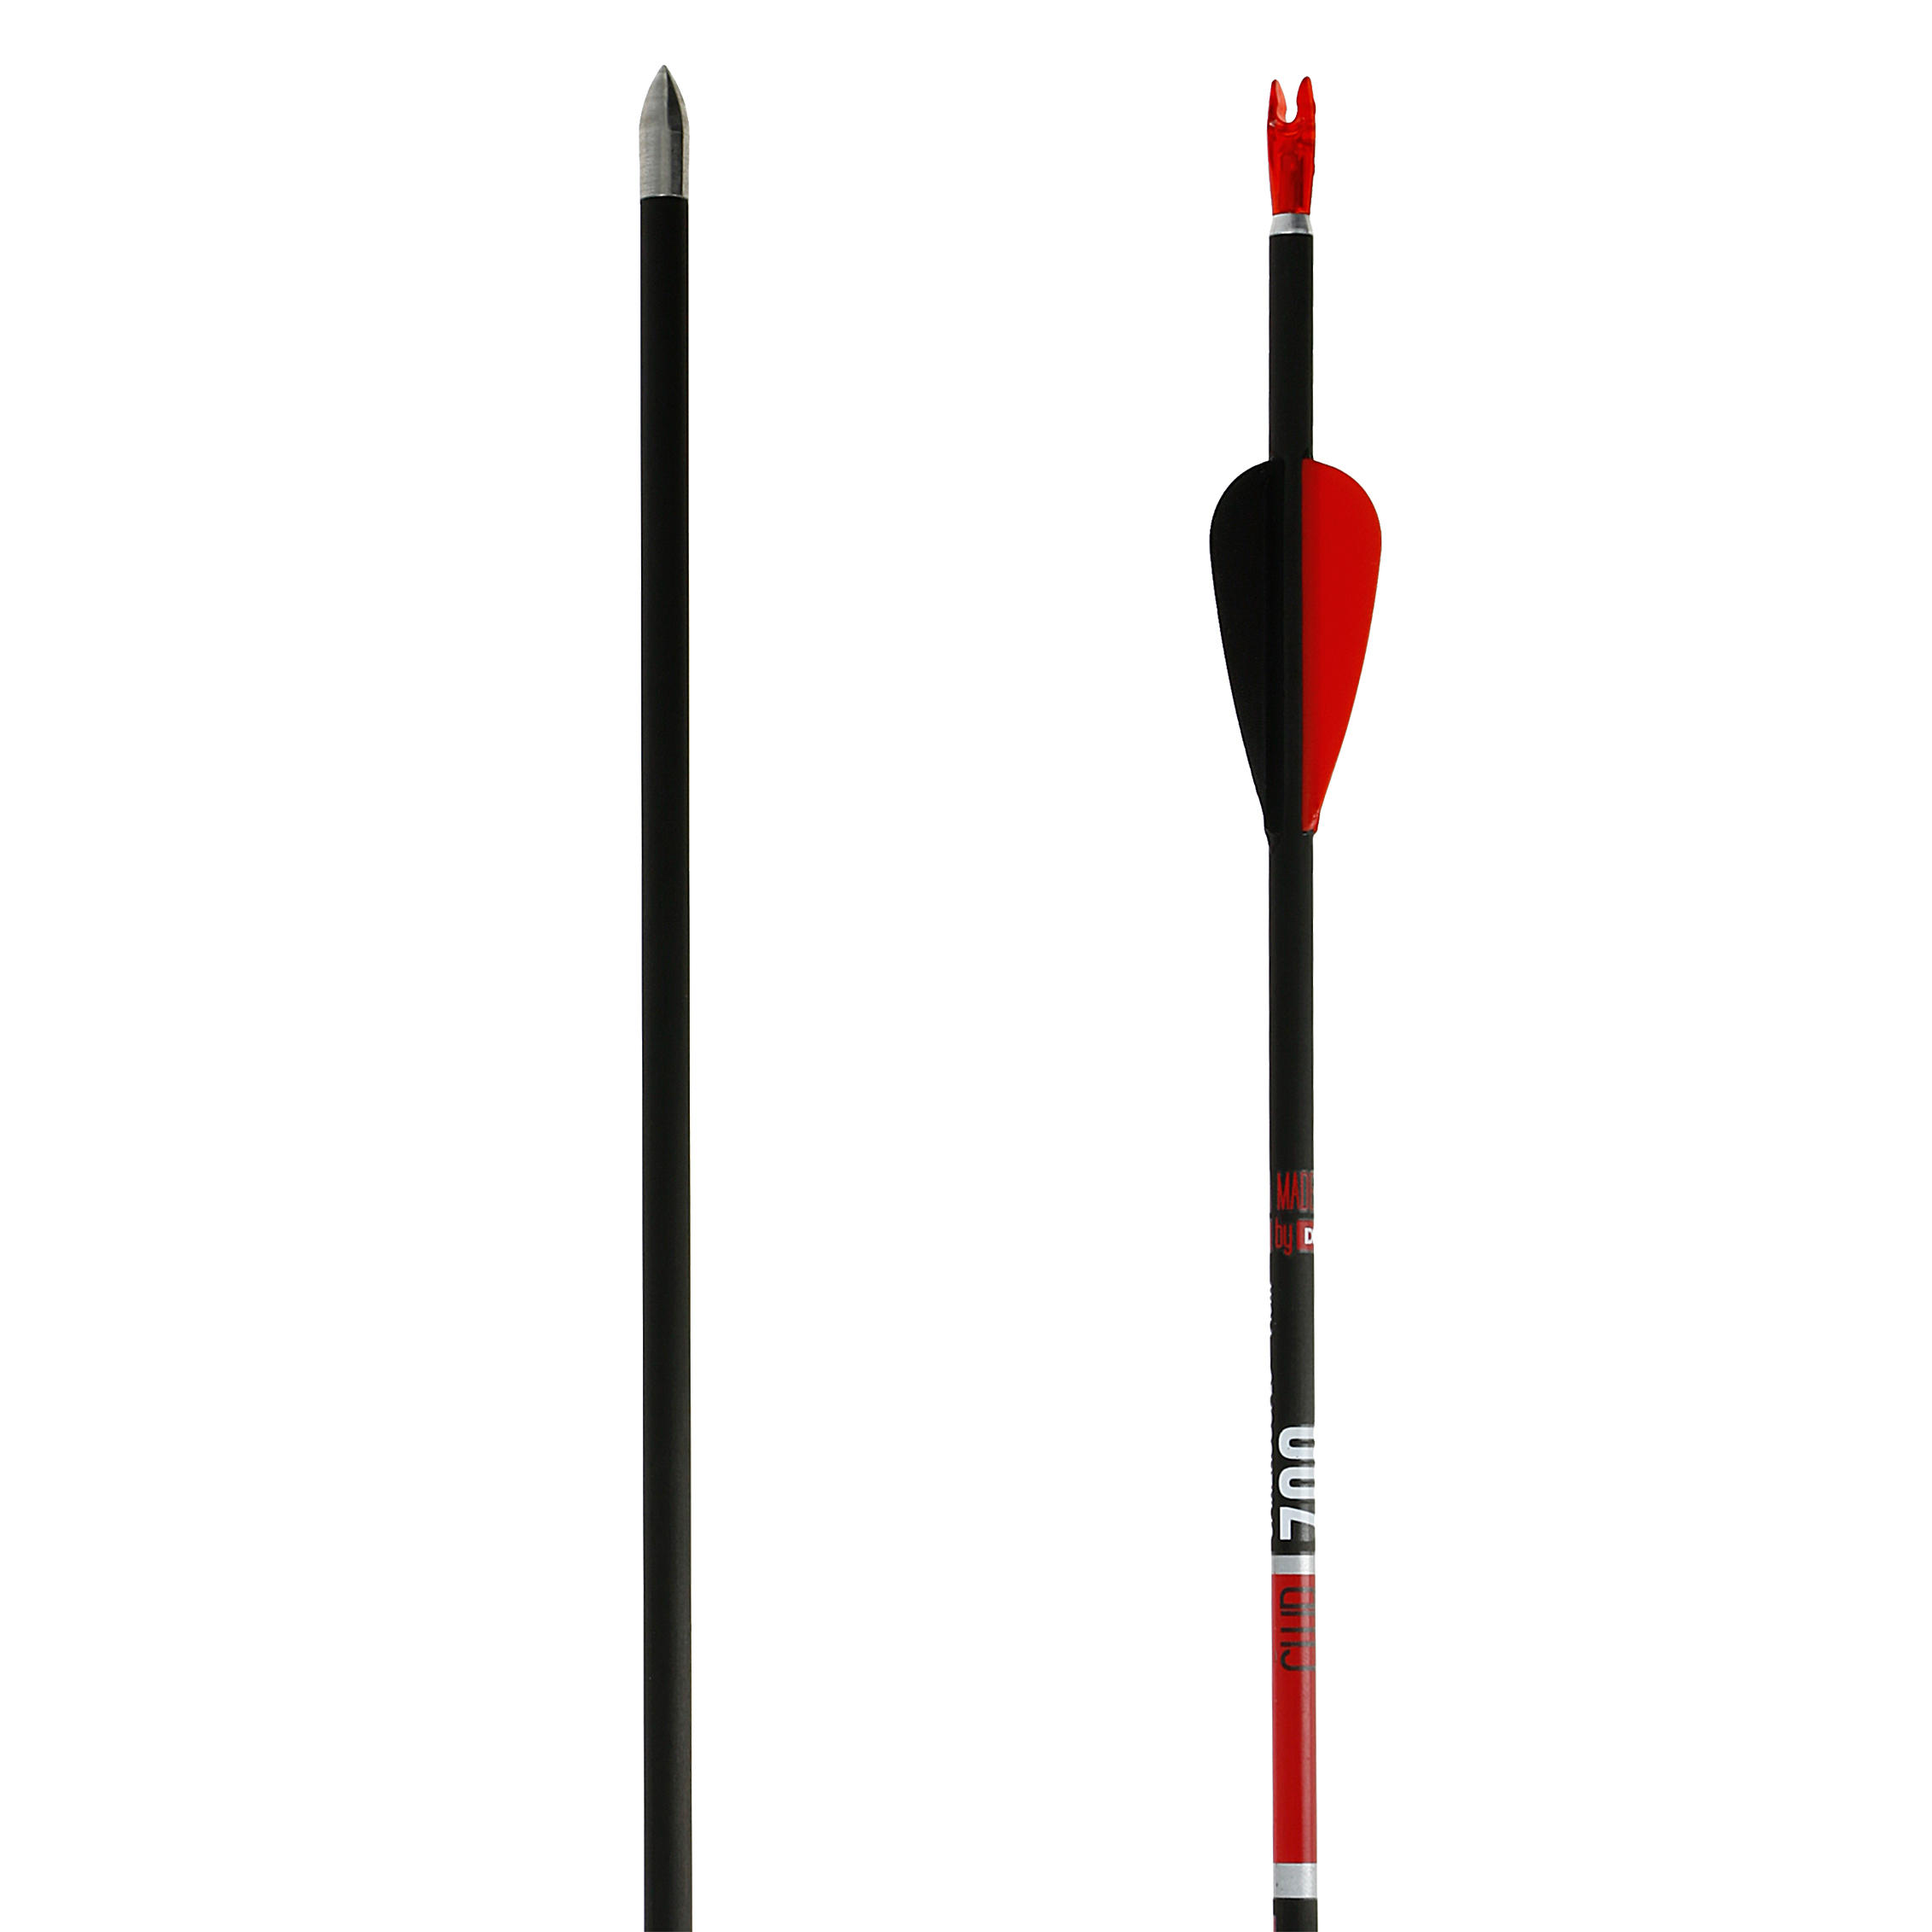 x3 Archery Recurve Bow Carbon Arrows - Club 700  - GEOLOGIC